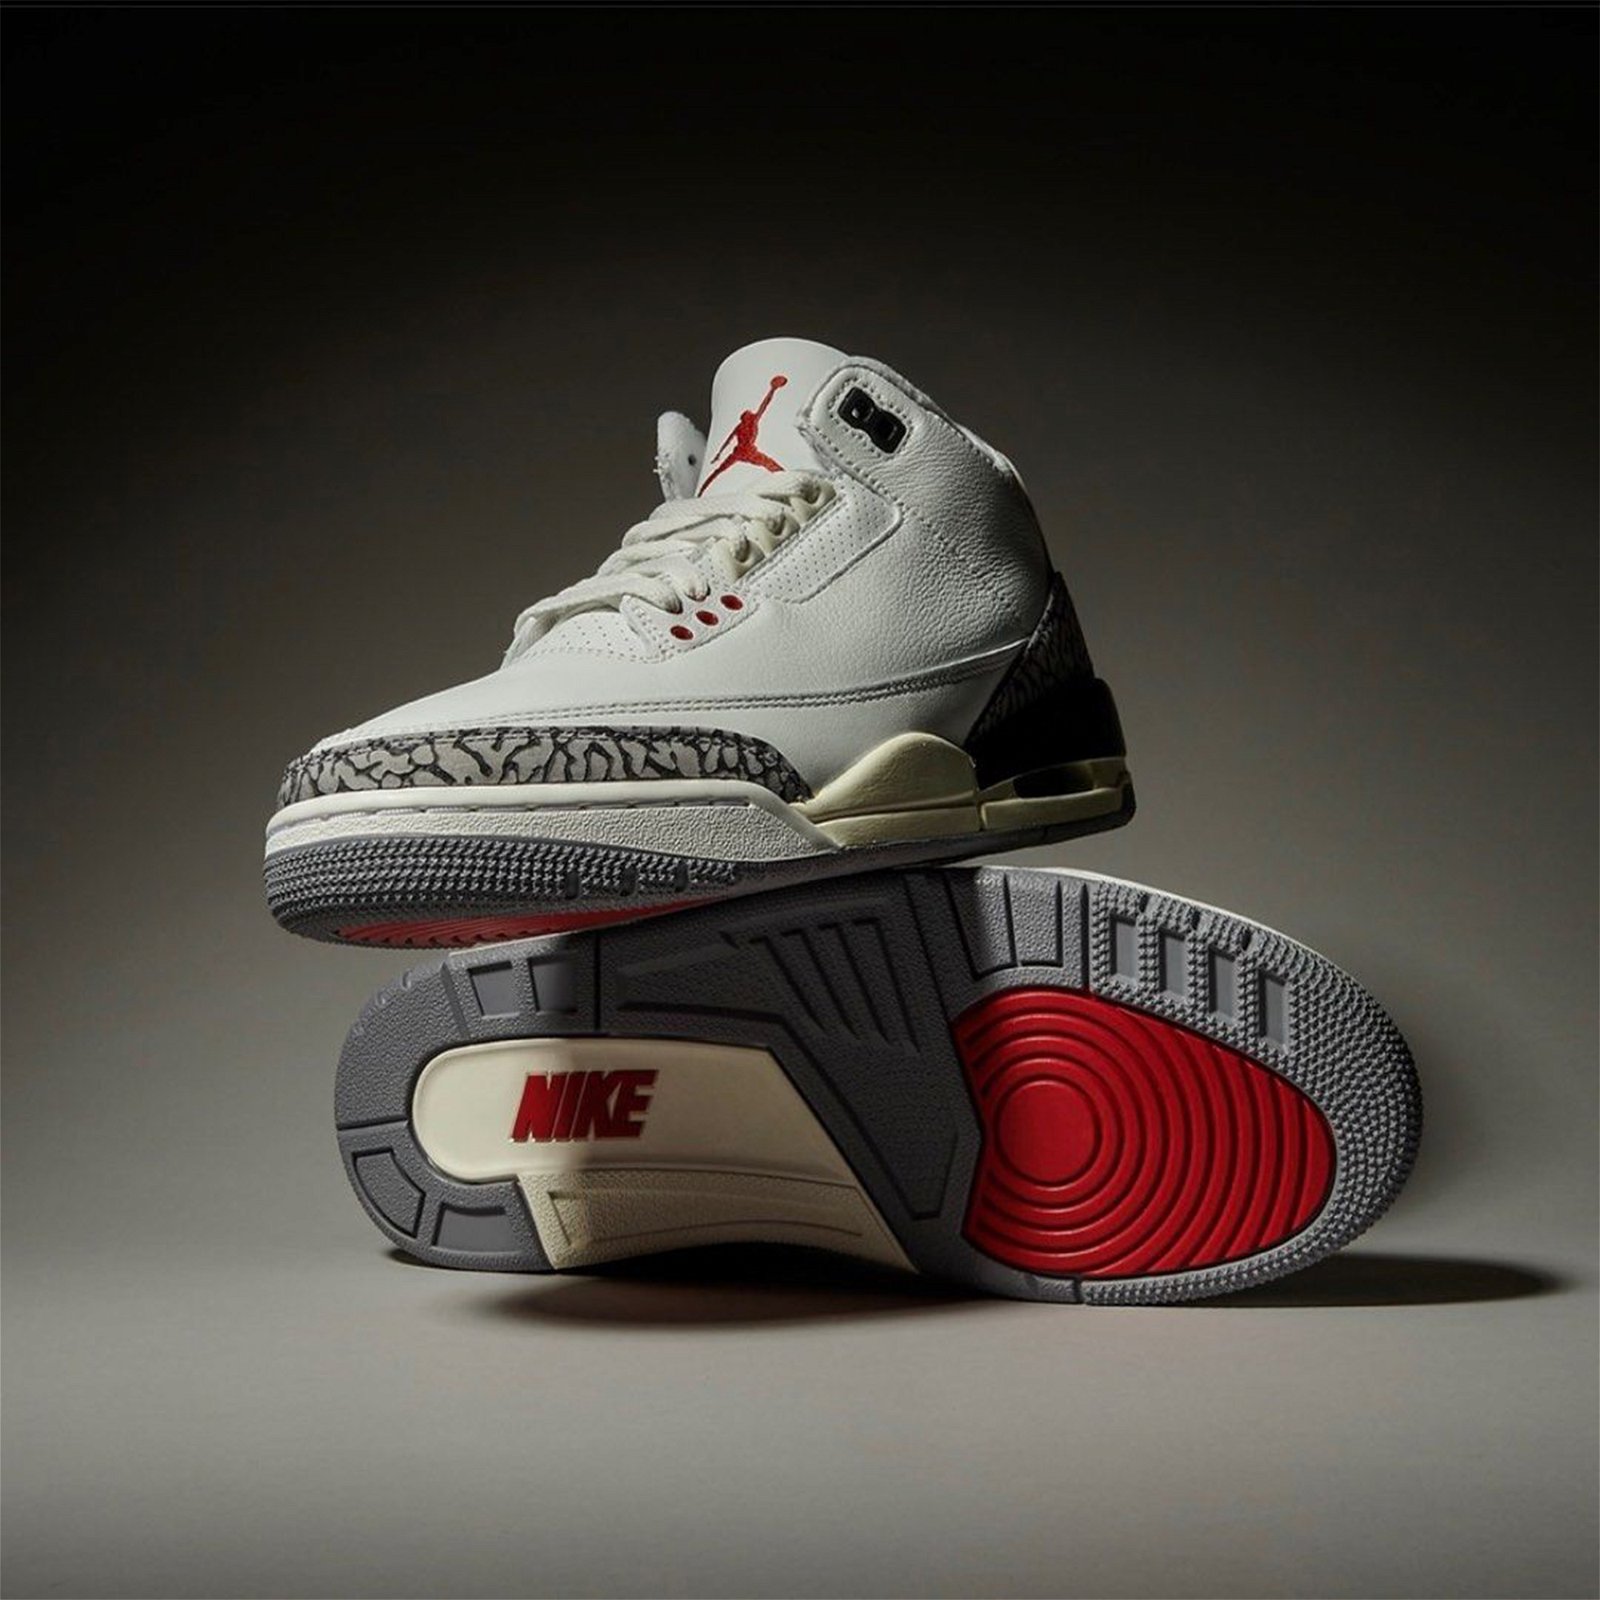 Flex teniska týdne - Air Jordan 3 Retro "White Cement Reimagined"